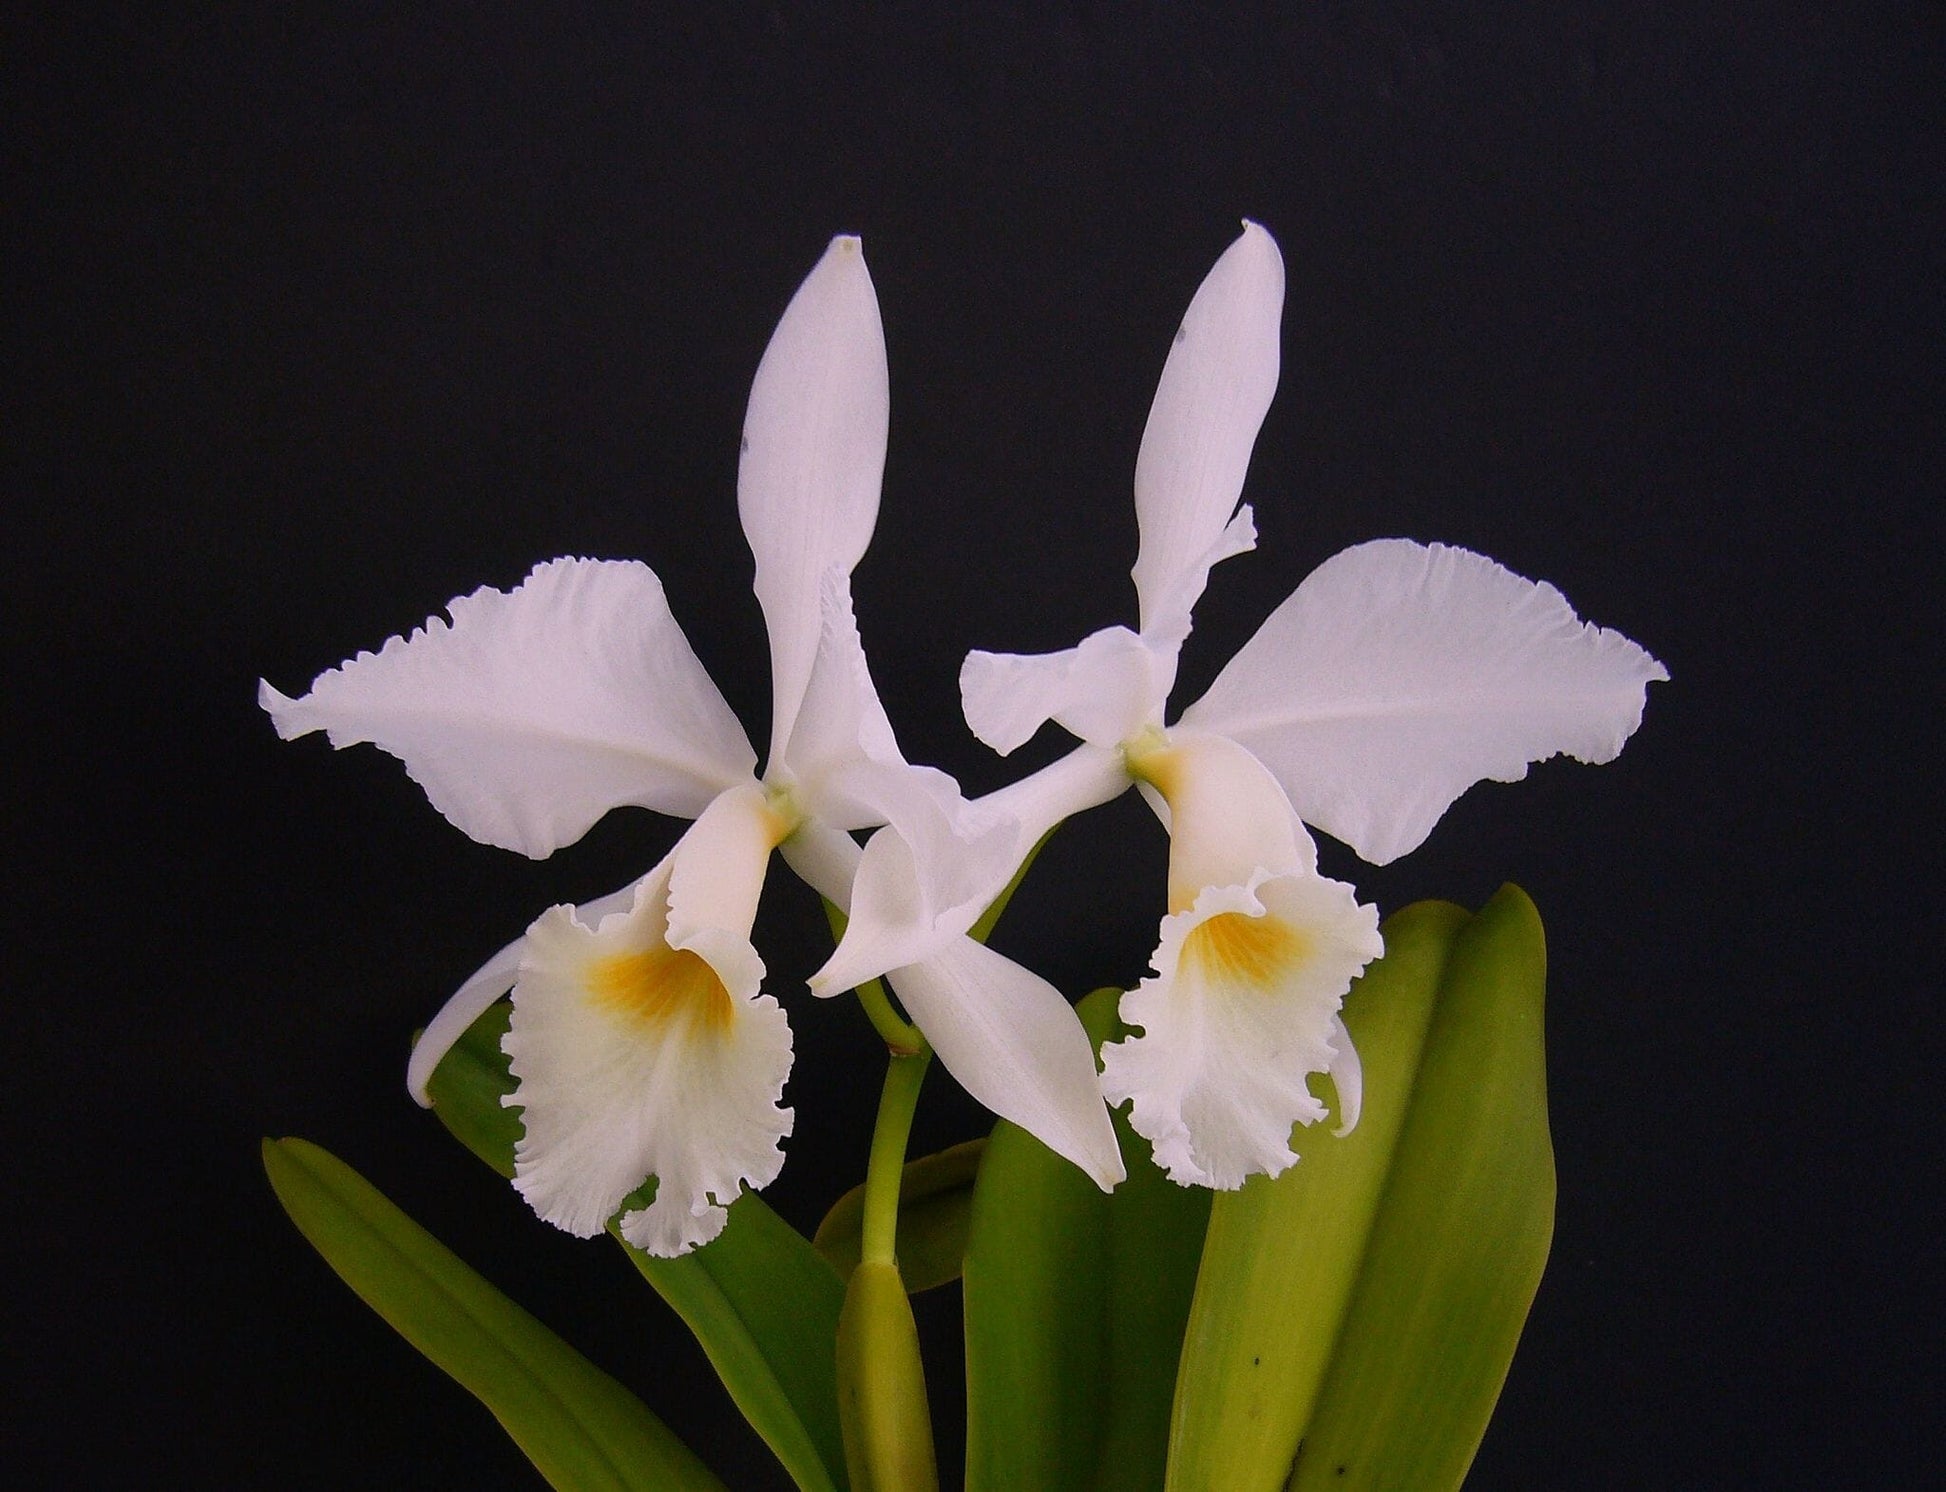 Cattleya labiata var. alba Cattleya La Foresta Orchids 